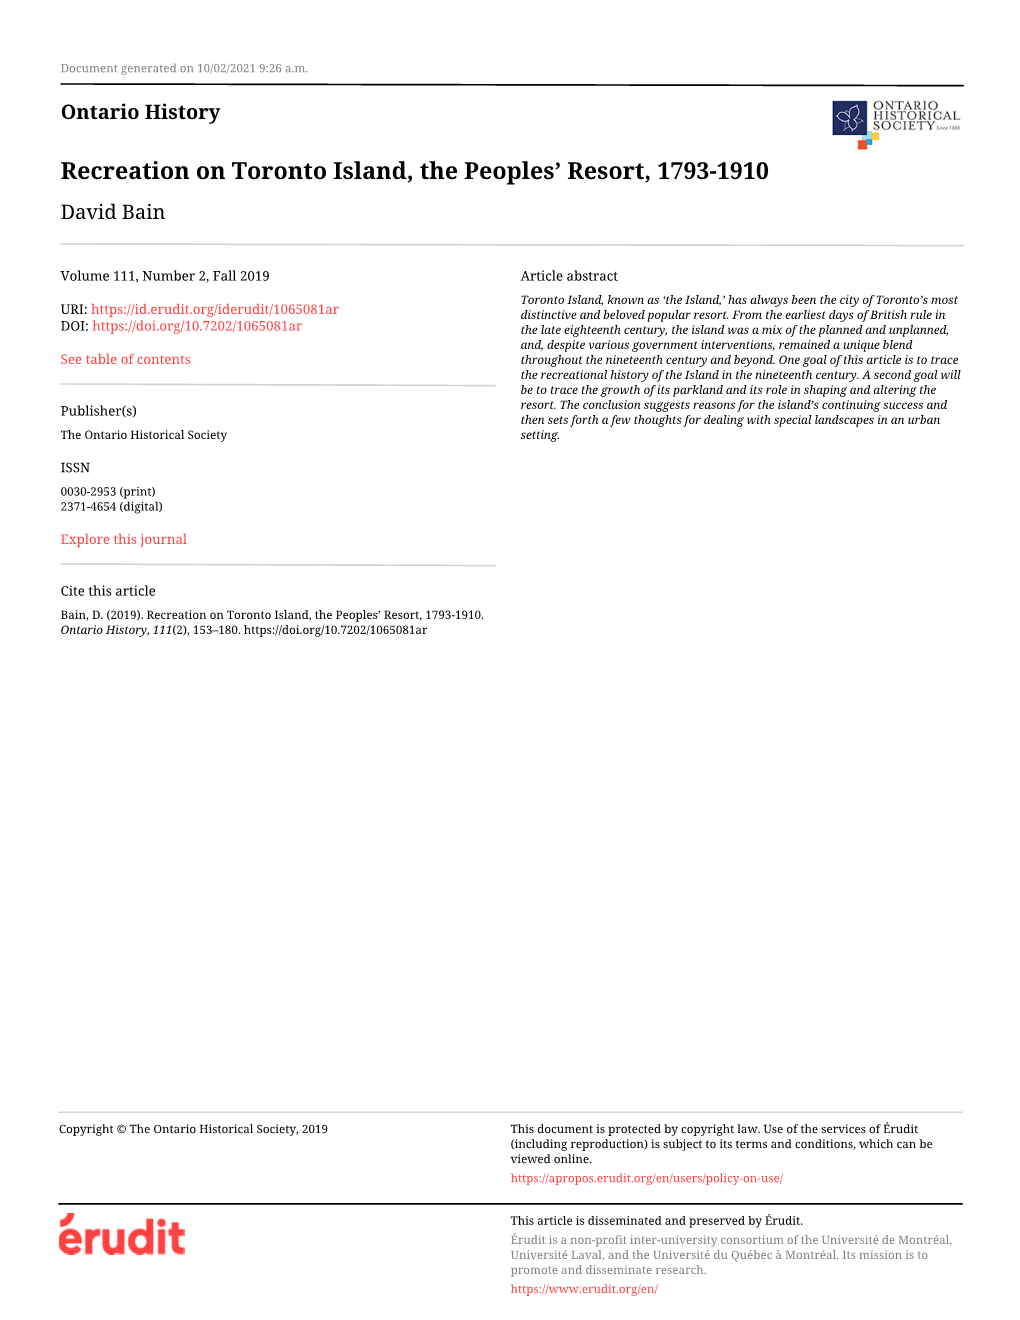 Recreation on Toronto Island, the Peoples' Resort, 1793-1910